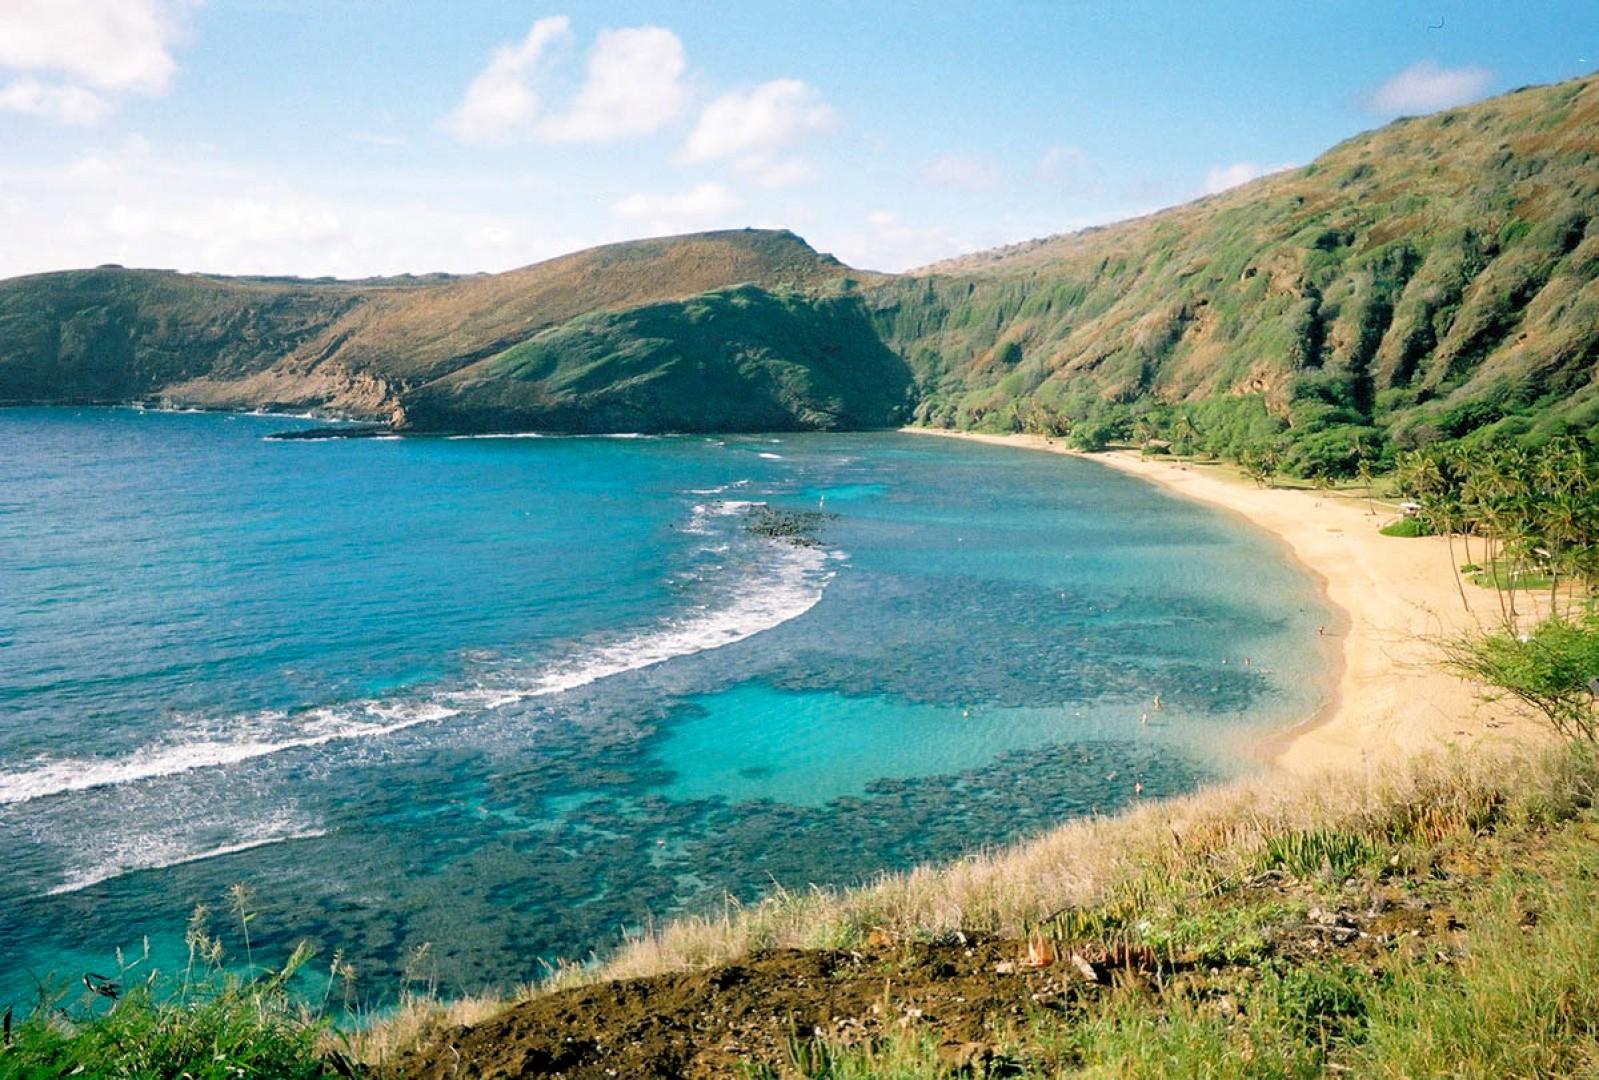 Honolulu Vacation Rentals, Casa de Makalei - Beaches like world-famous Hanauma Bay are only a short drive away!